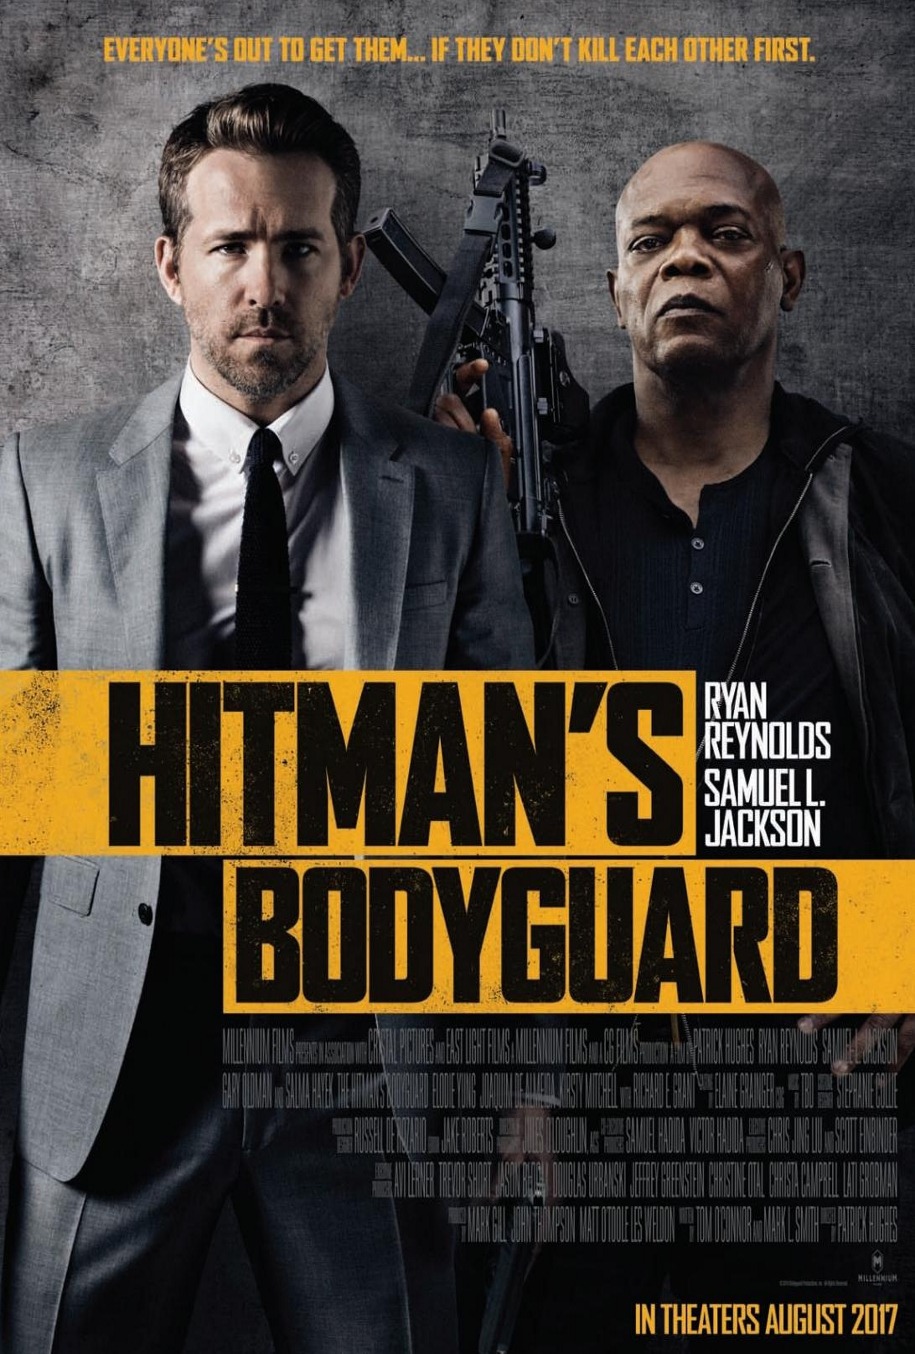 The Hitman's Bodyguard - Wikipedia